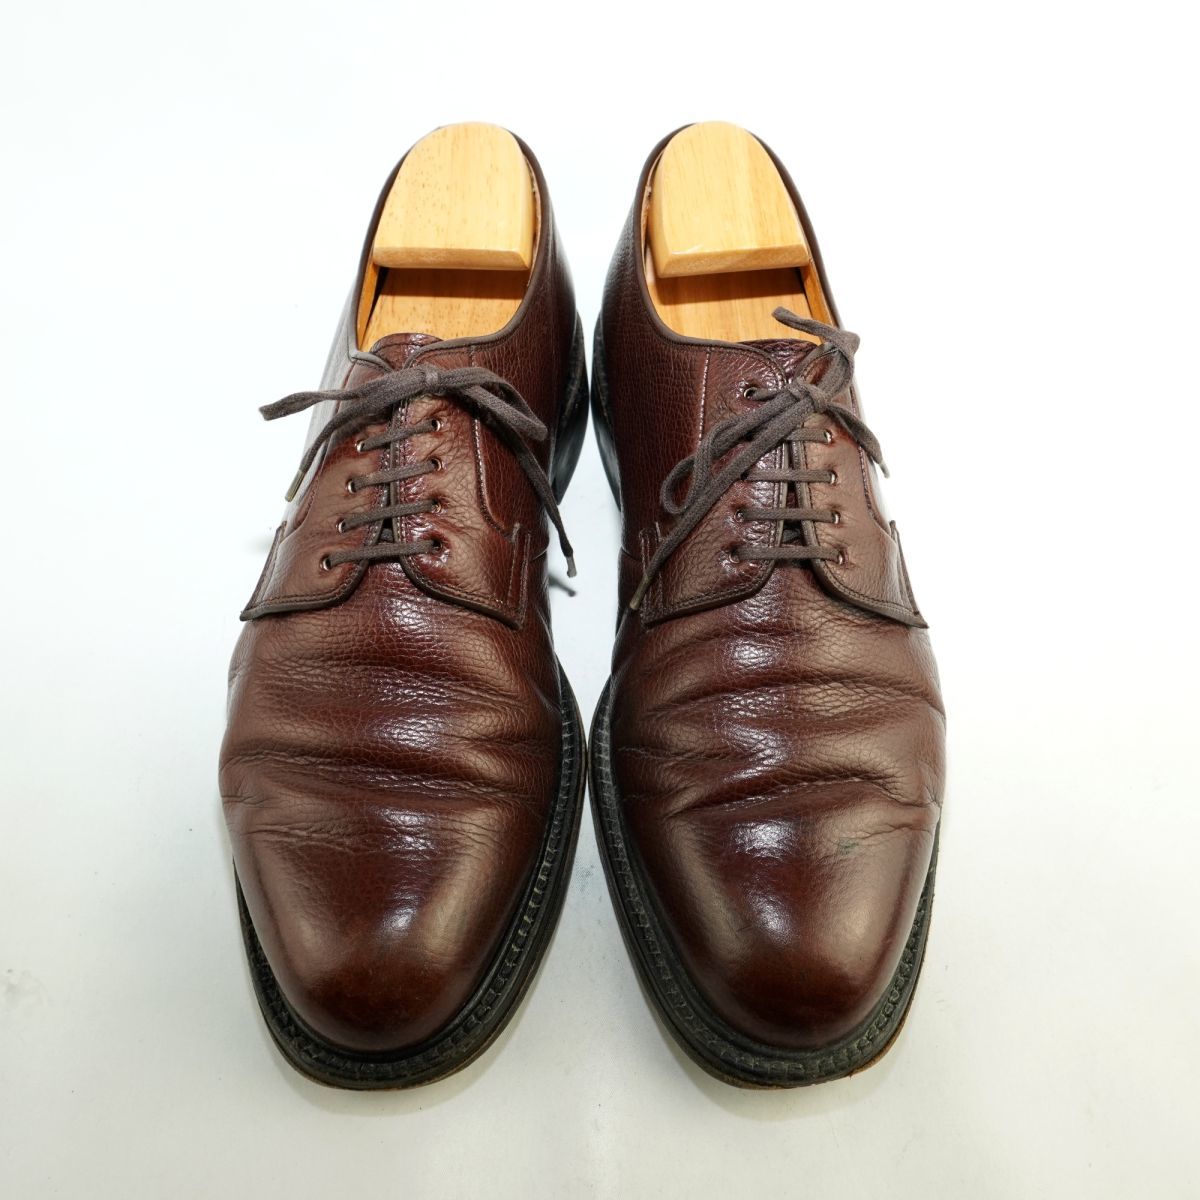 Jarman shoes for men ジャーマン 25 1/2 25.5 革靴 ビジネスシューズ 外羽根式 メンズ レザー 本革 茶色 ブラウン/EC60_画像2